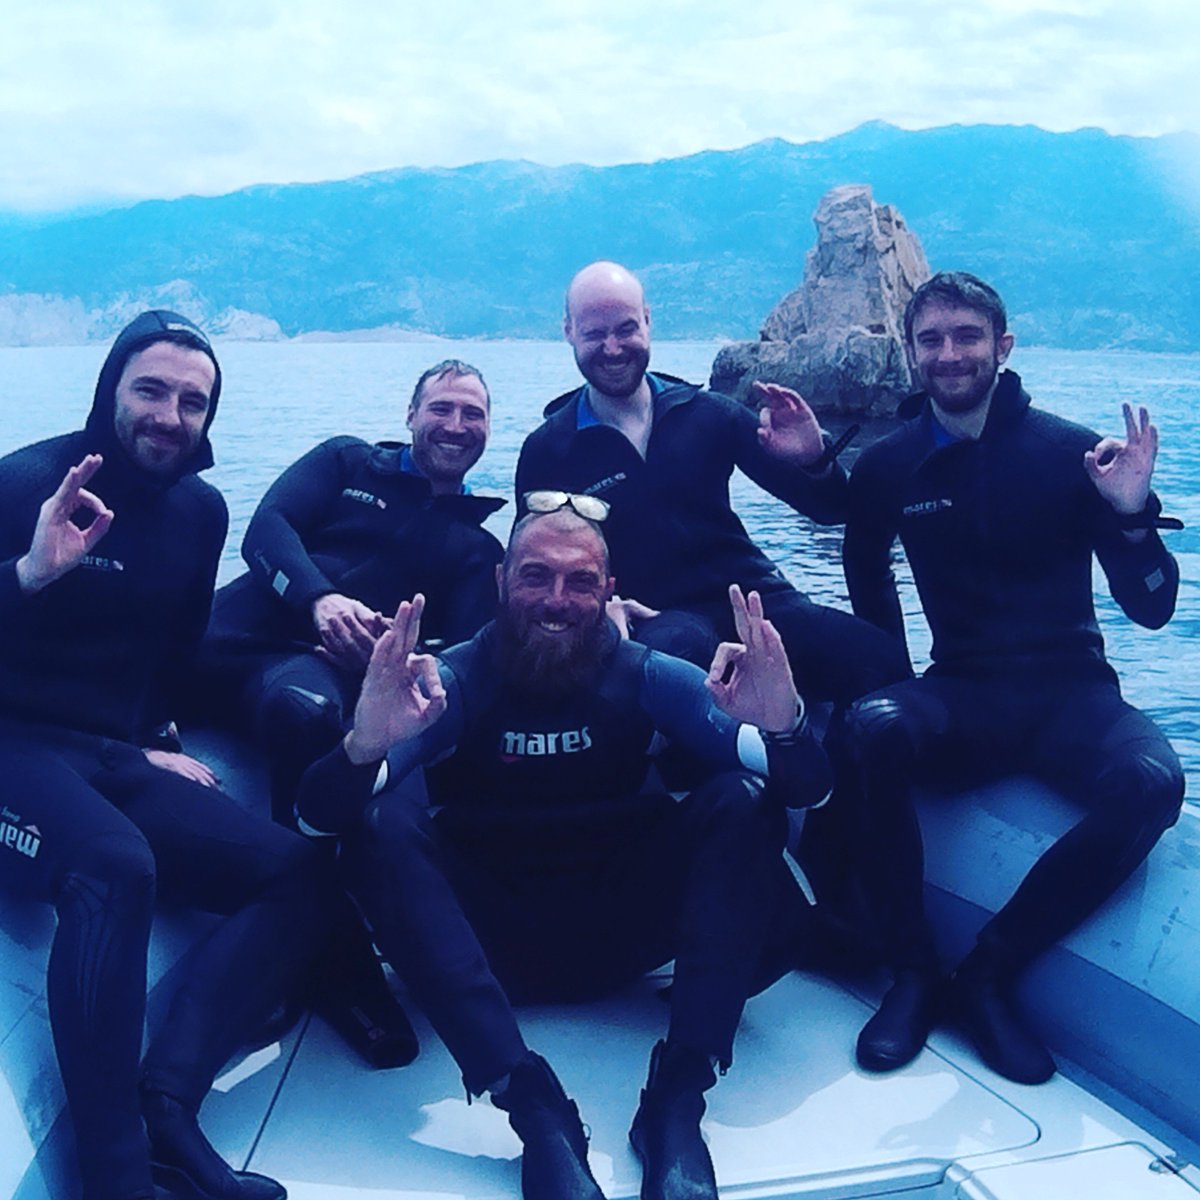 Congratulations guys! Fresh SSI open water diver! A lot of fun! #divessi #holidays #summer #rabisland #krondiving #divingcourse #divingisfun #maresjustaddwater